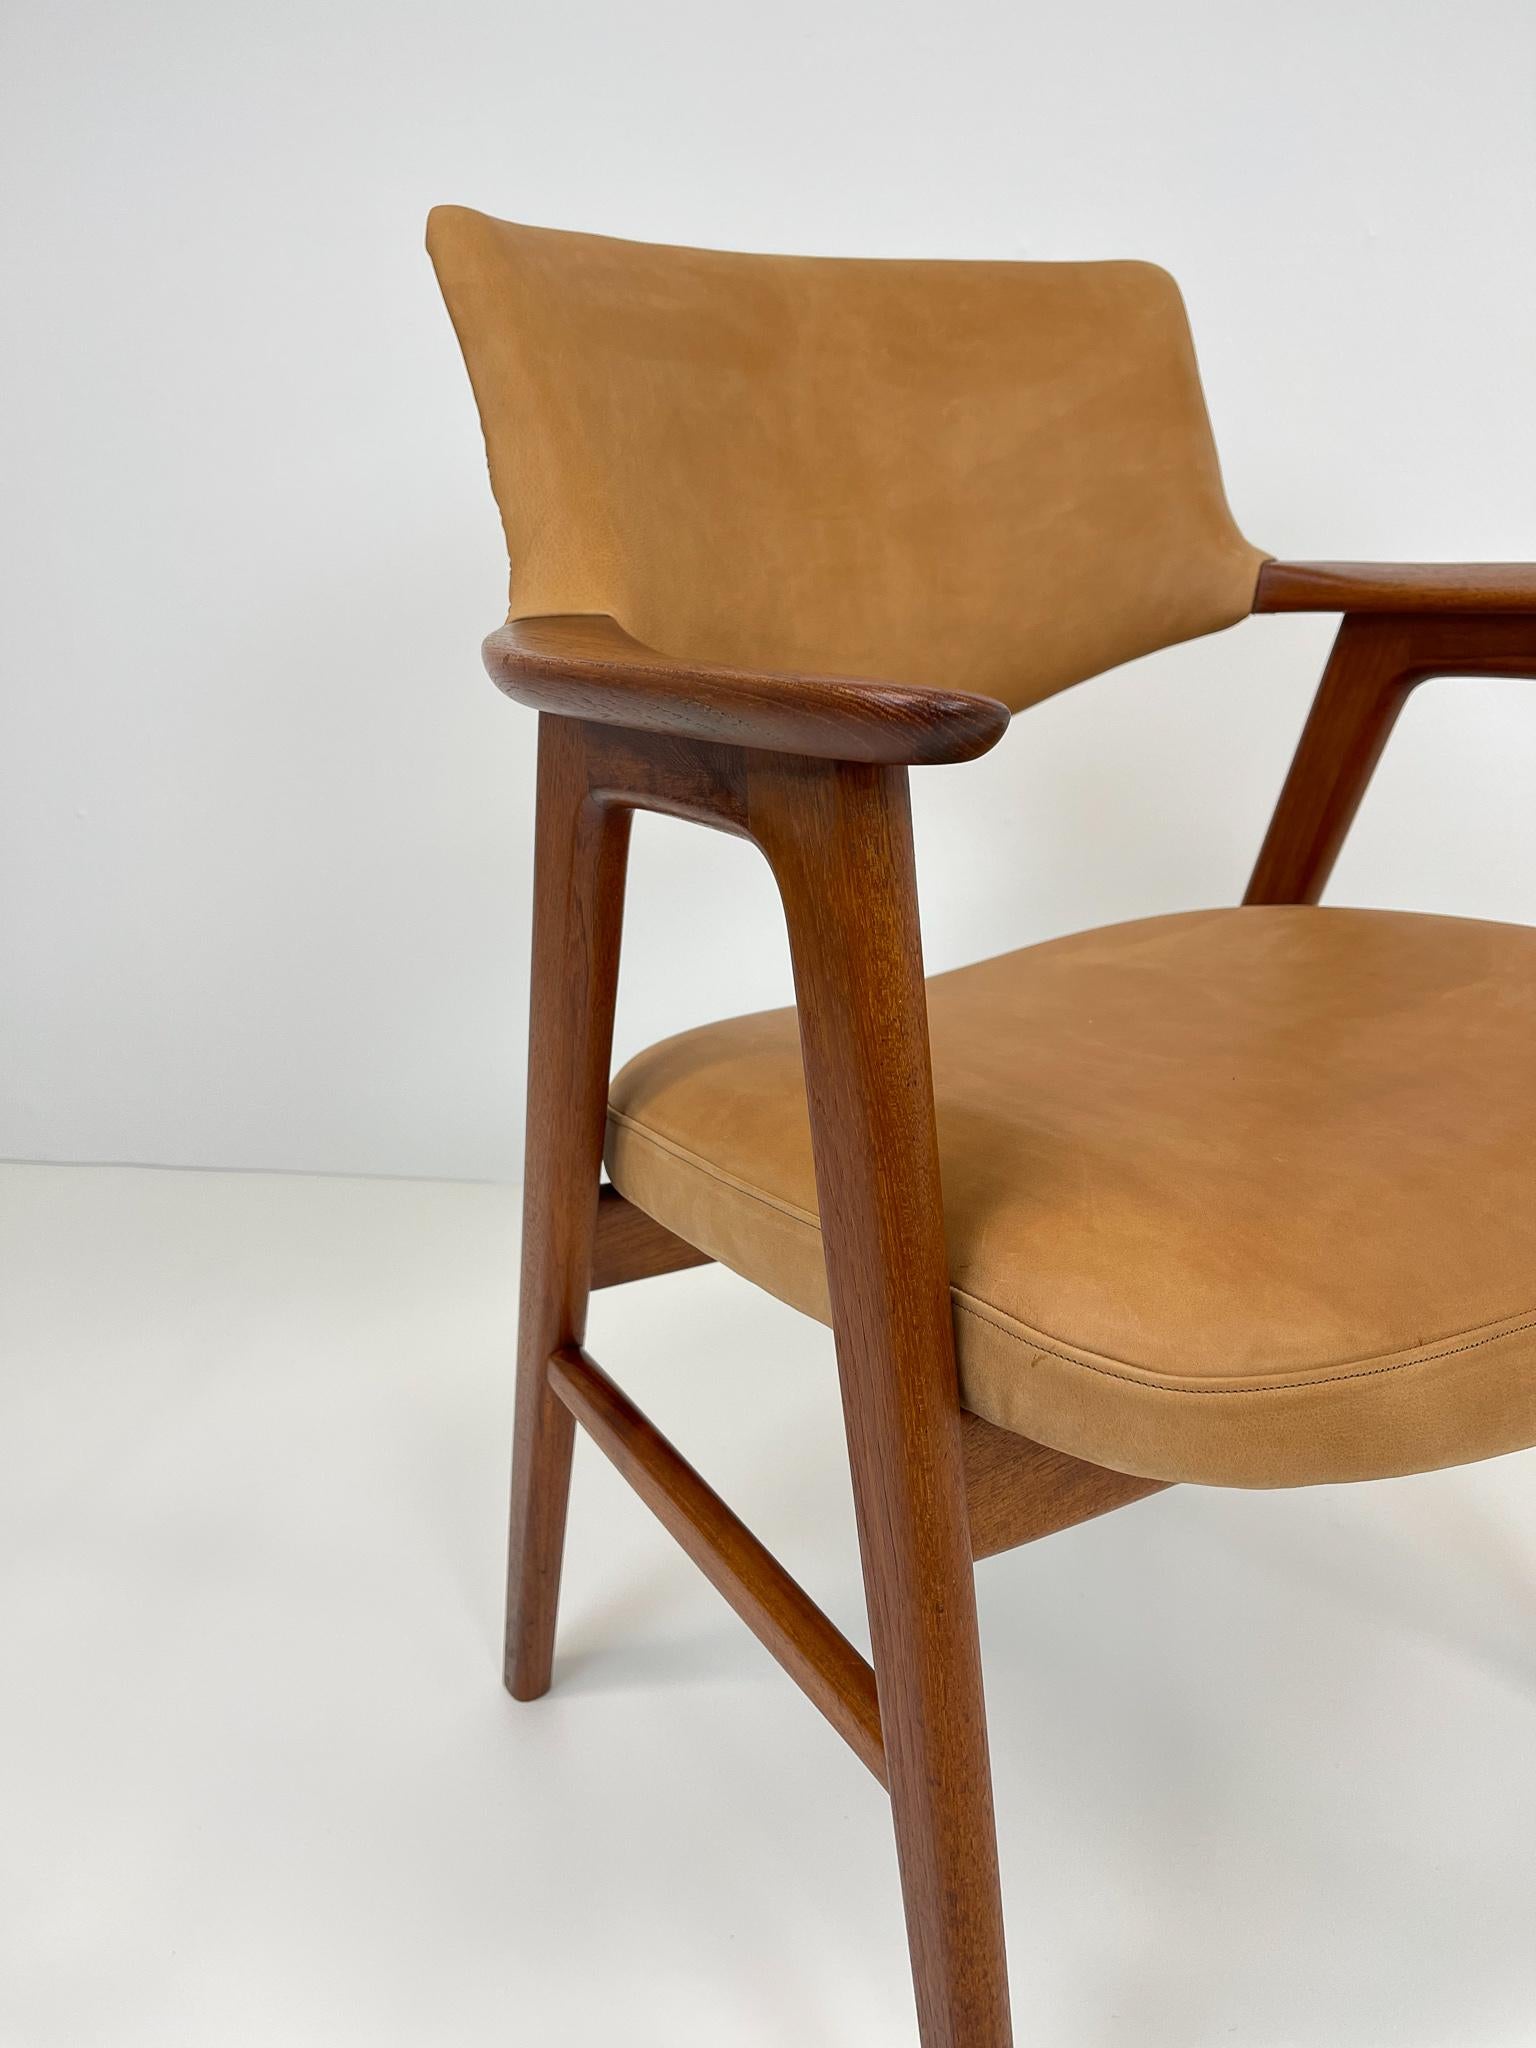 Midcentury Erik Kirkegaard Danish Teak and Leather Desk Chair, 1960s For Sale 6